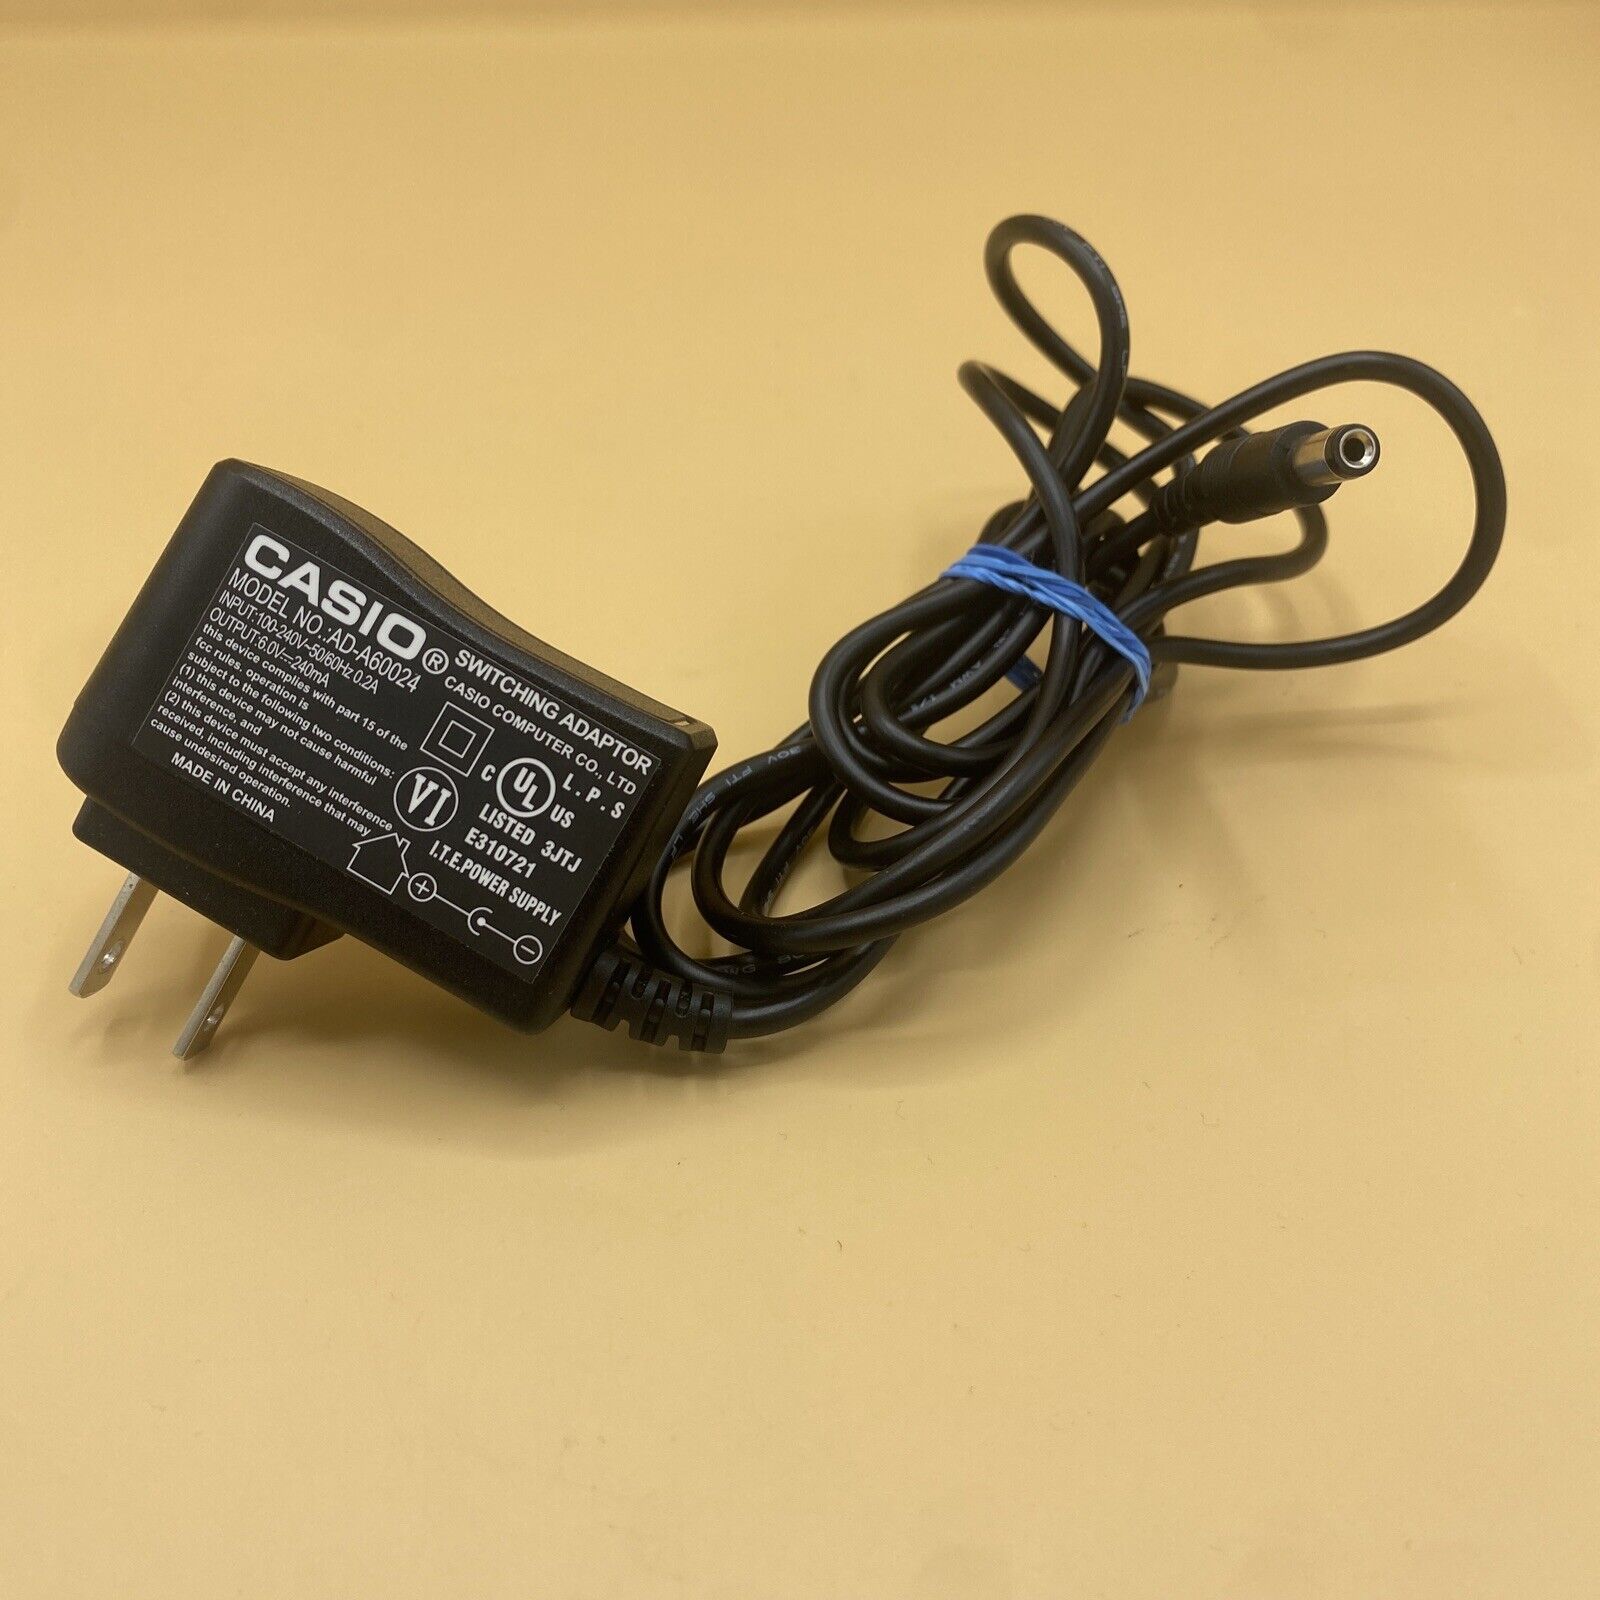 *Brand NEW*Casio 6V 240mA AC Switching Adaptor Model AD-A60024 Plug In Supply Cord